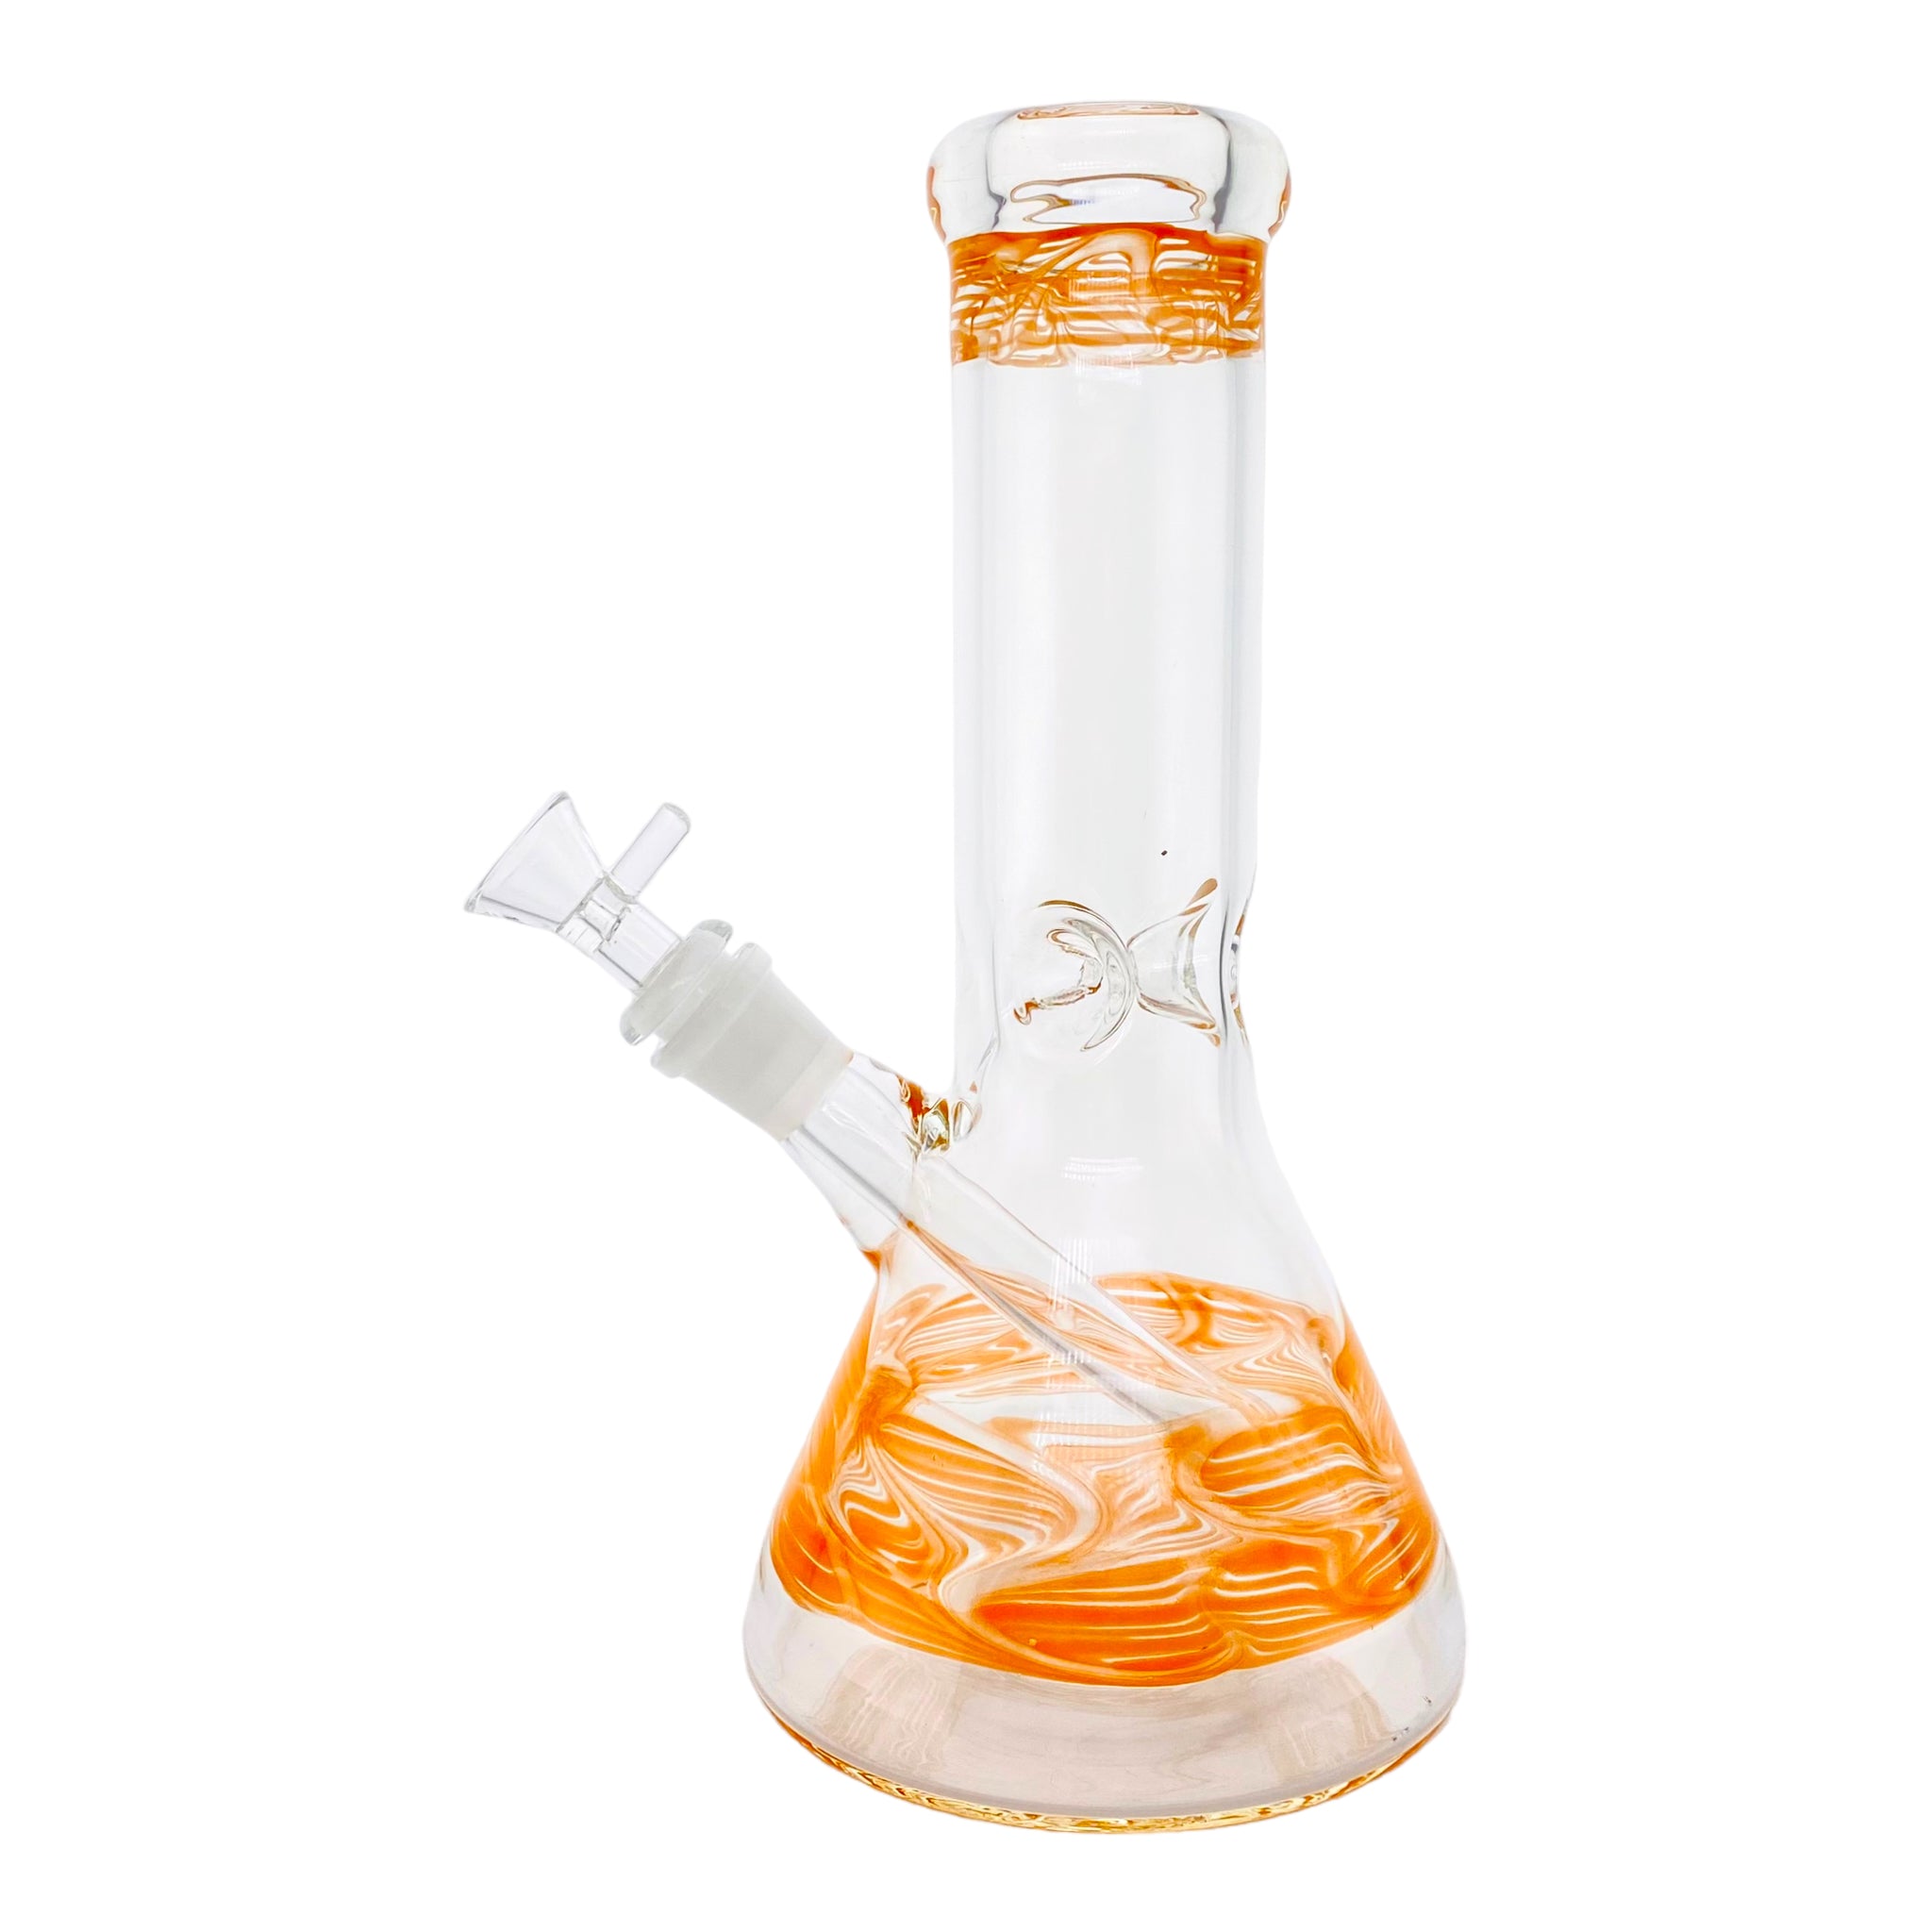 10 Inch Clear Beaker Bong With Orange Wrap And Rake